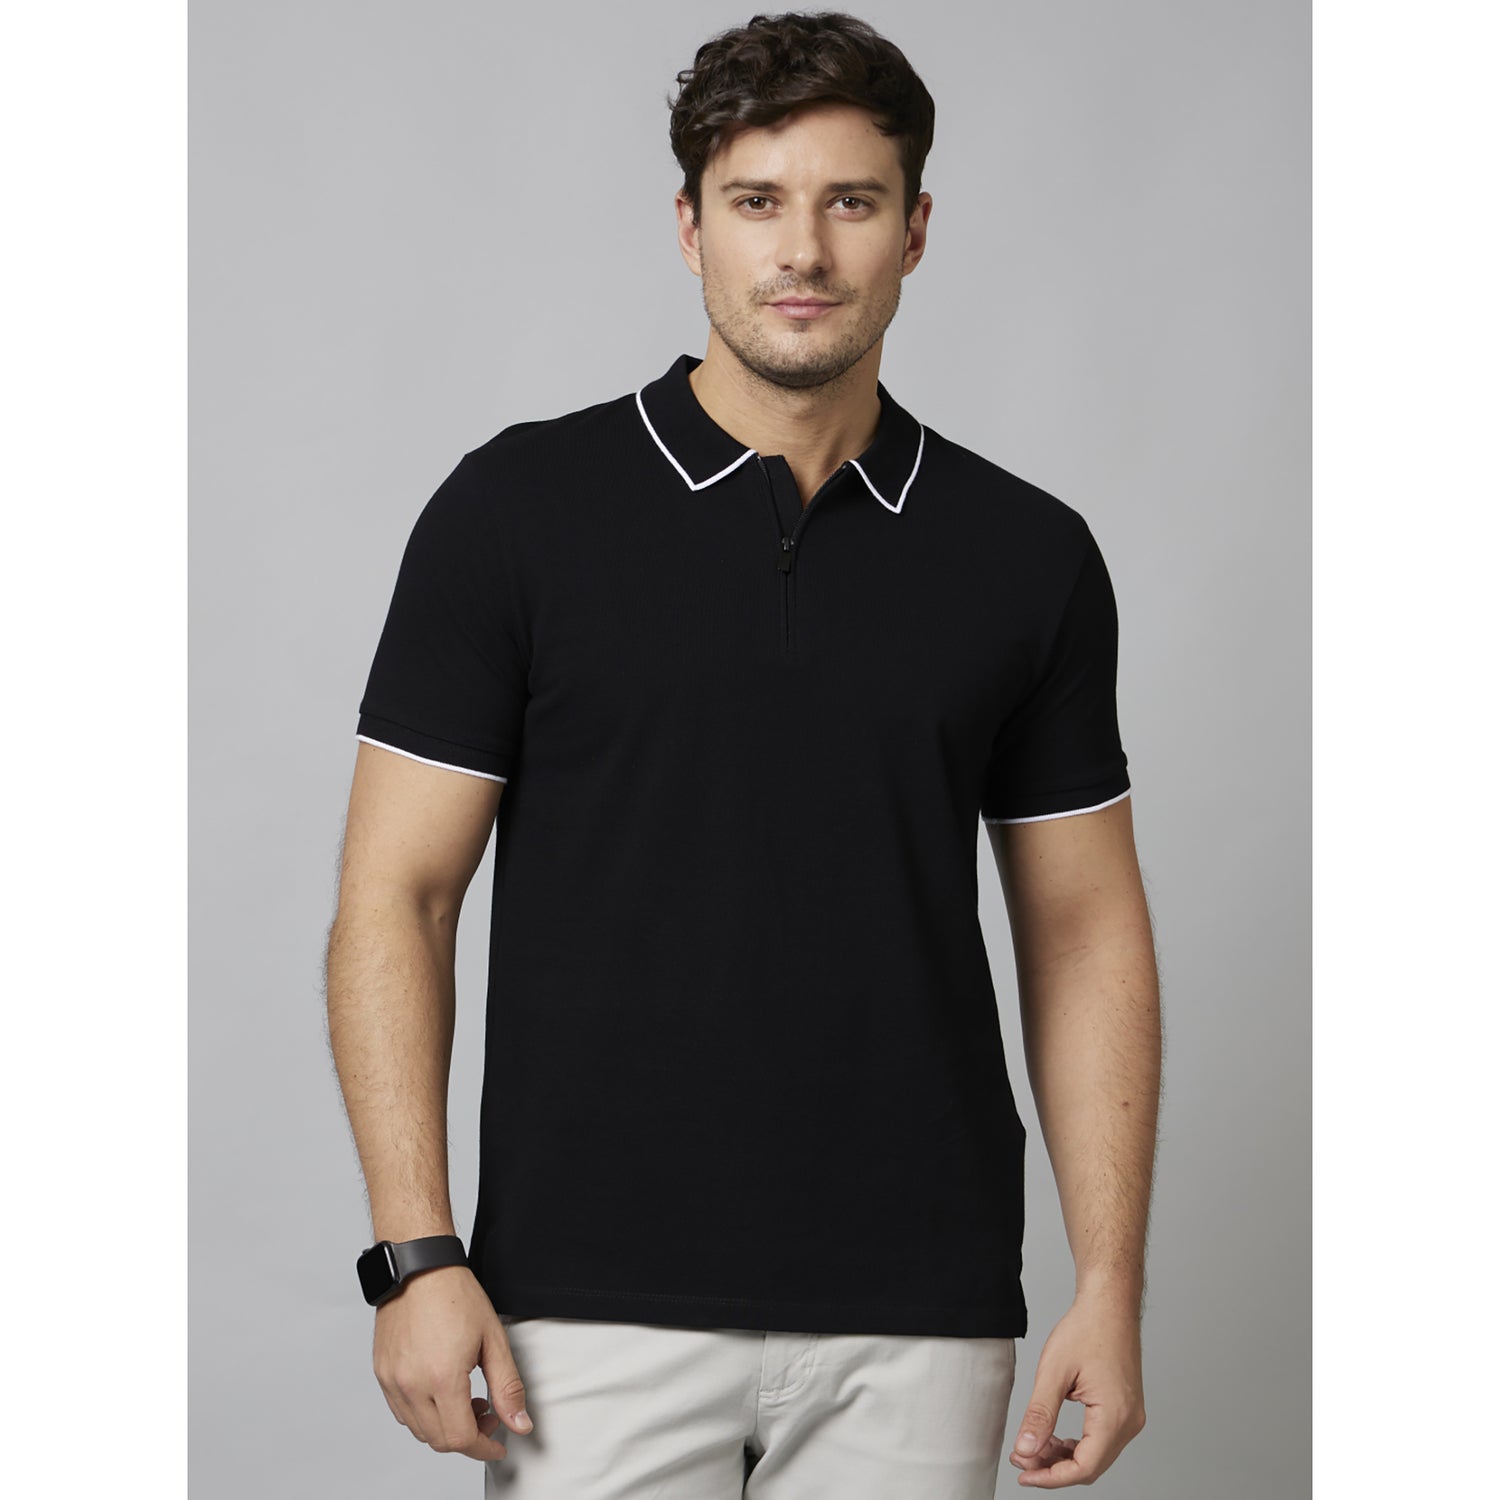 Black Solid Half Sleeve Cotton T-Shirts (FEZIP1)